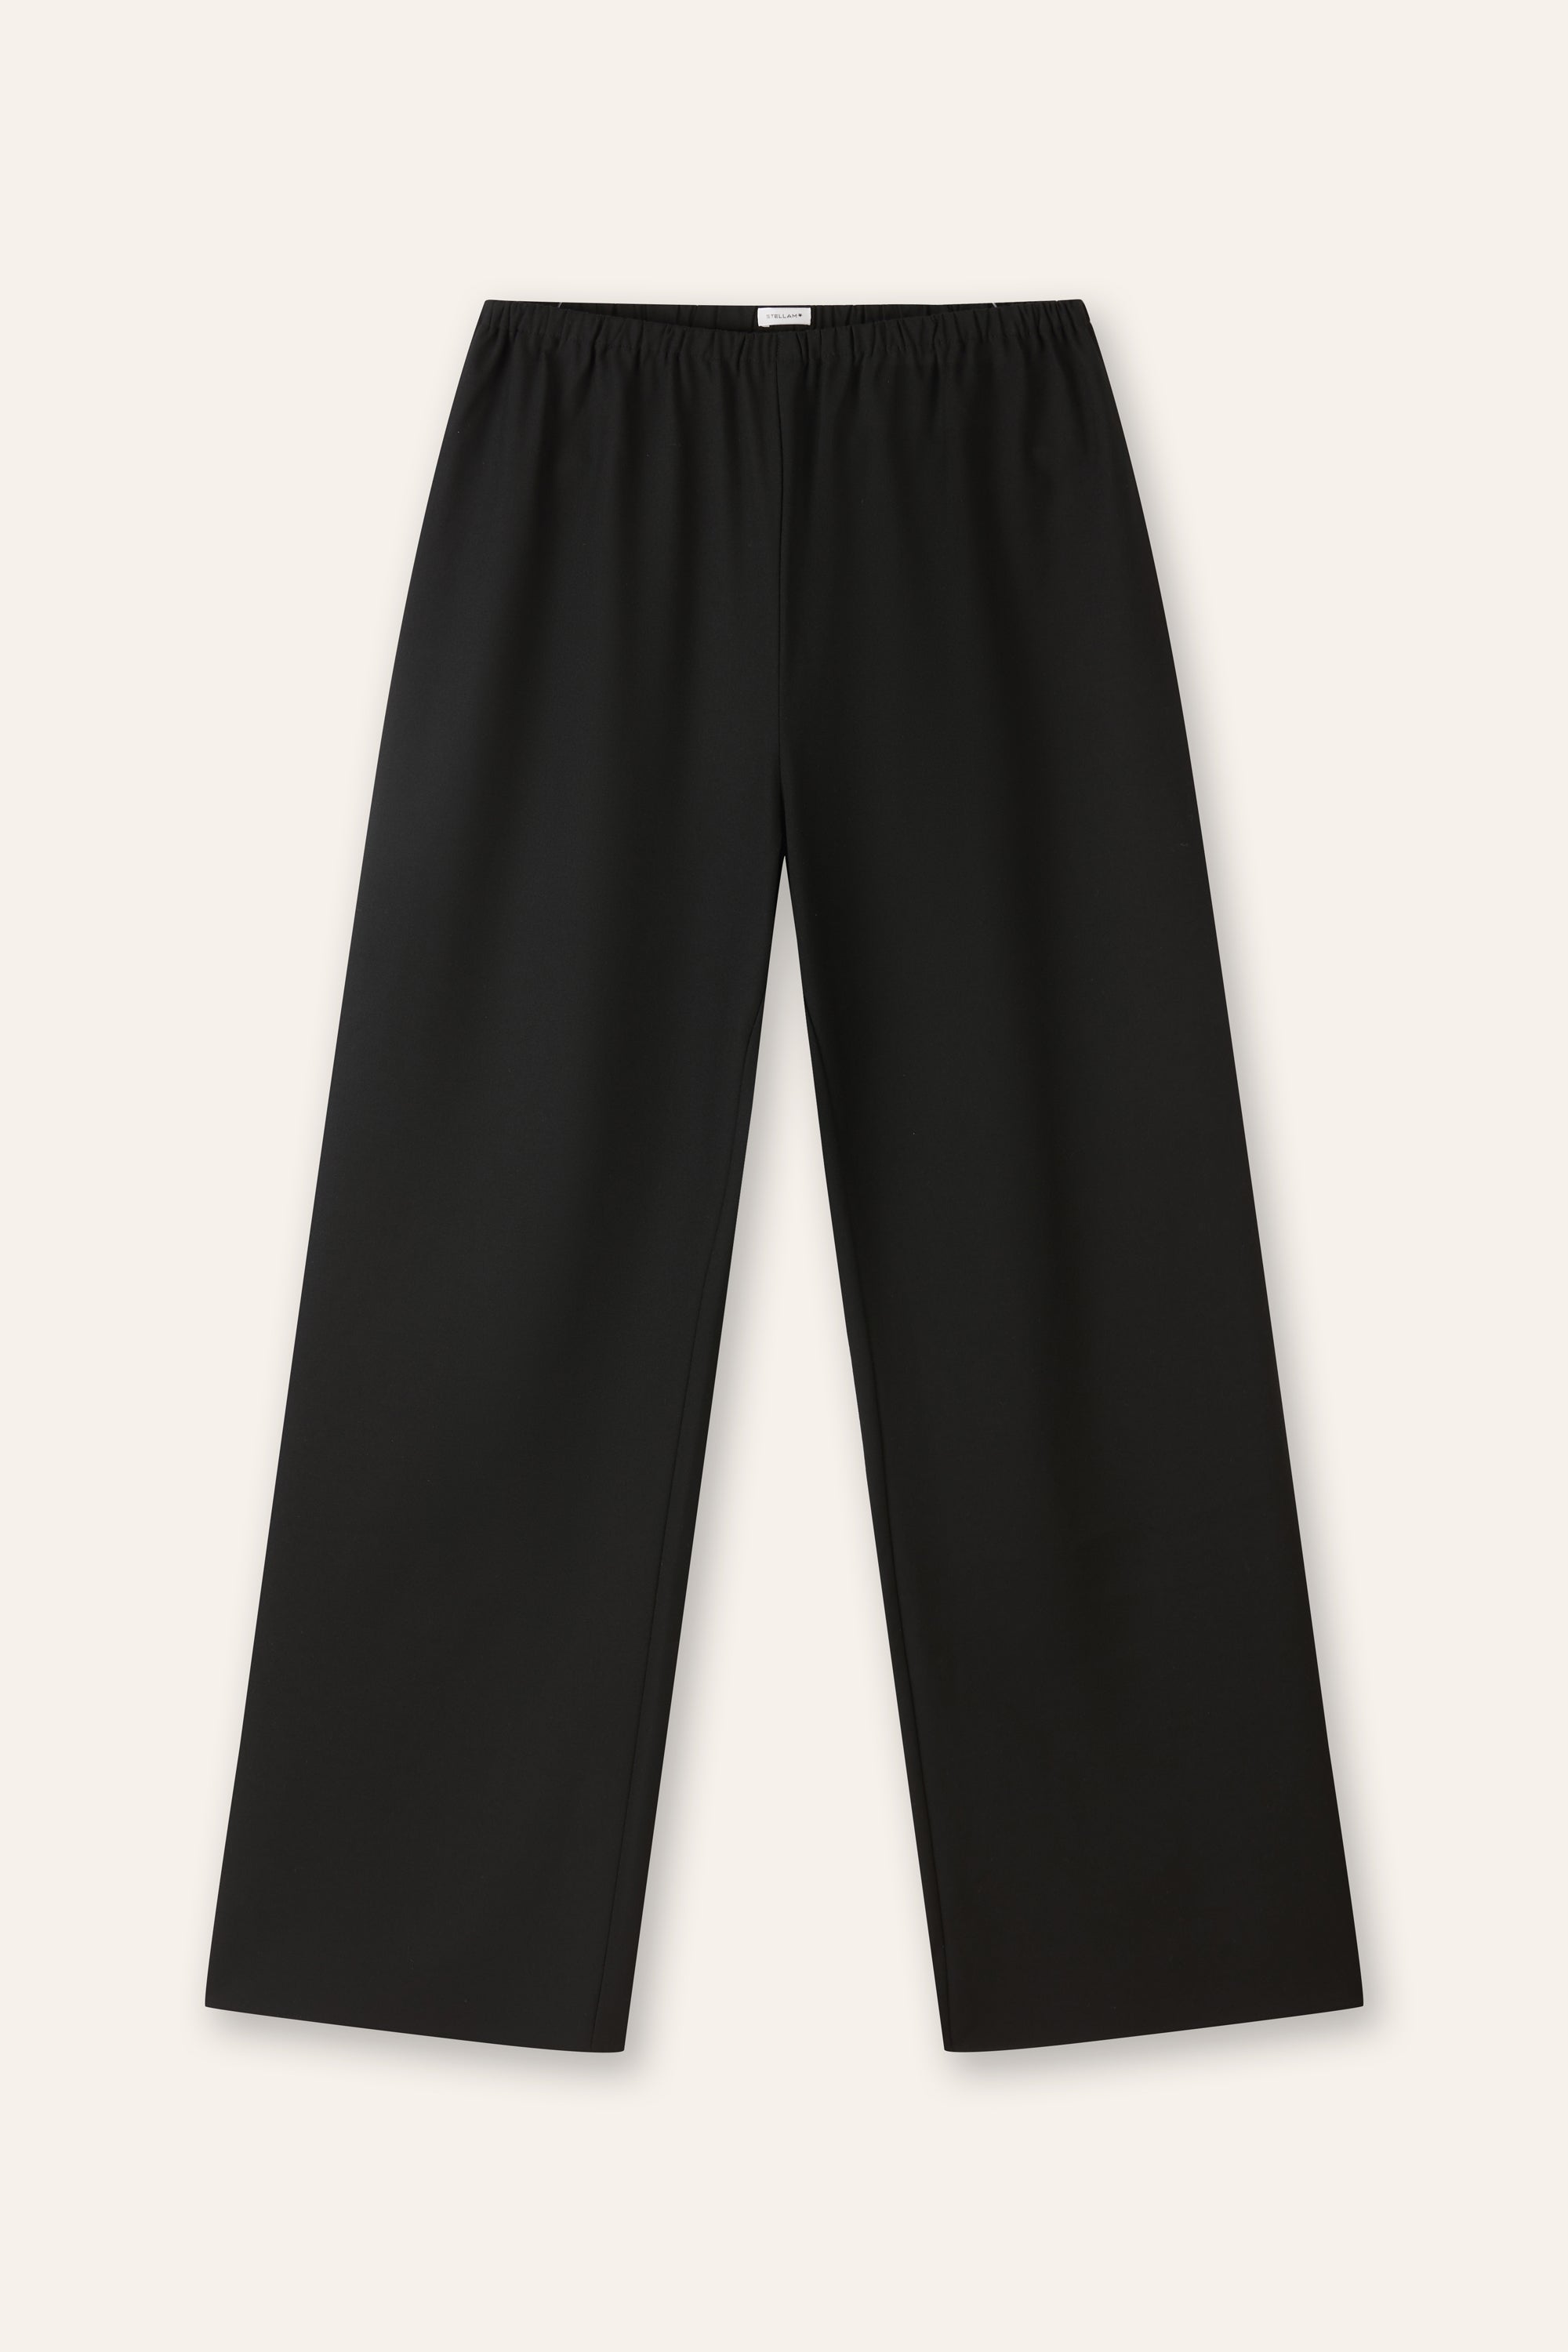 MONDAY wool-blended pants (Black)